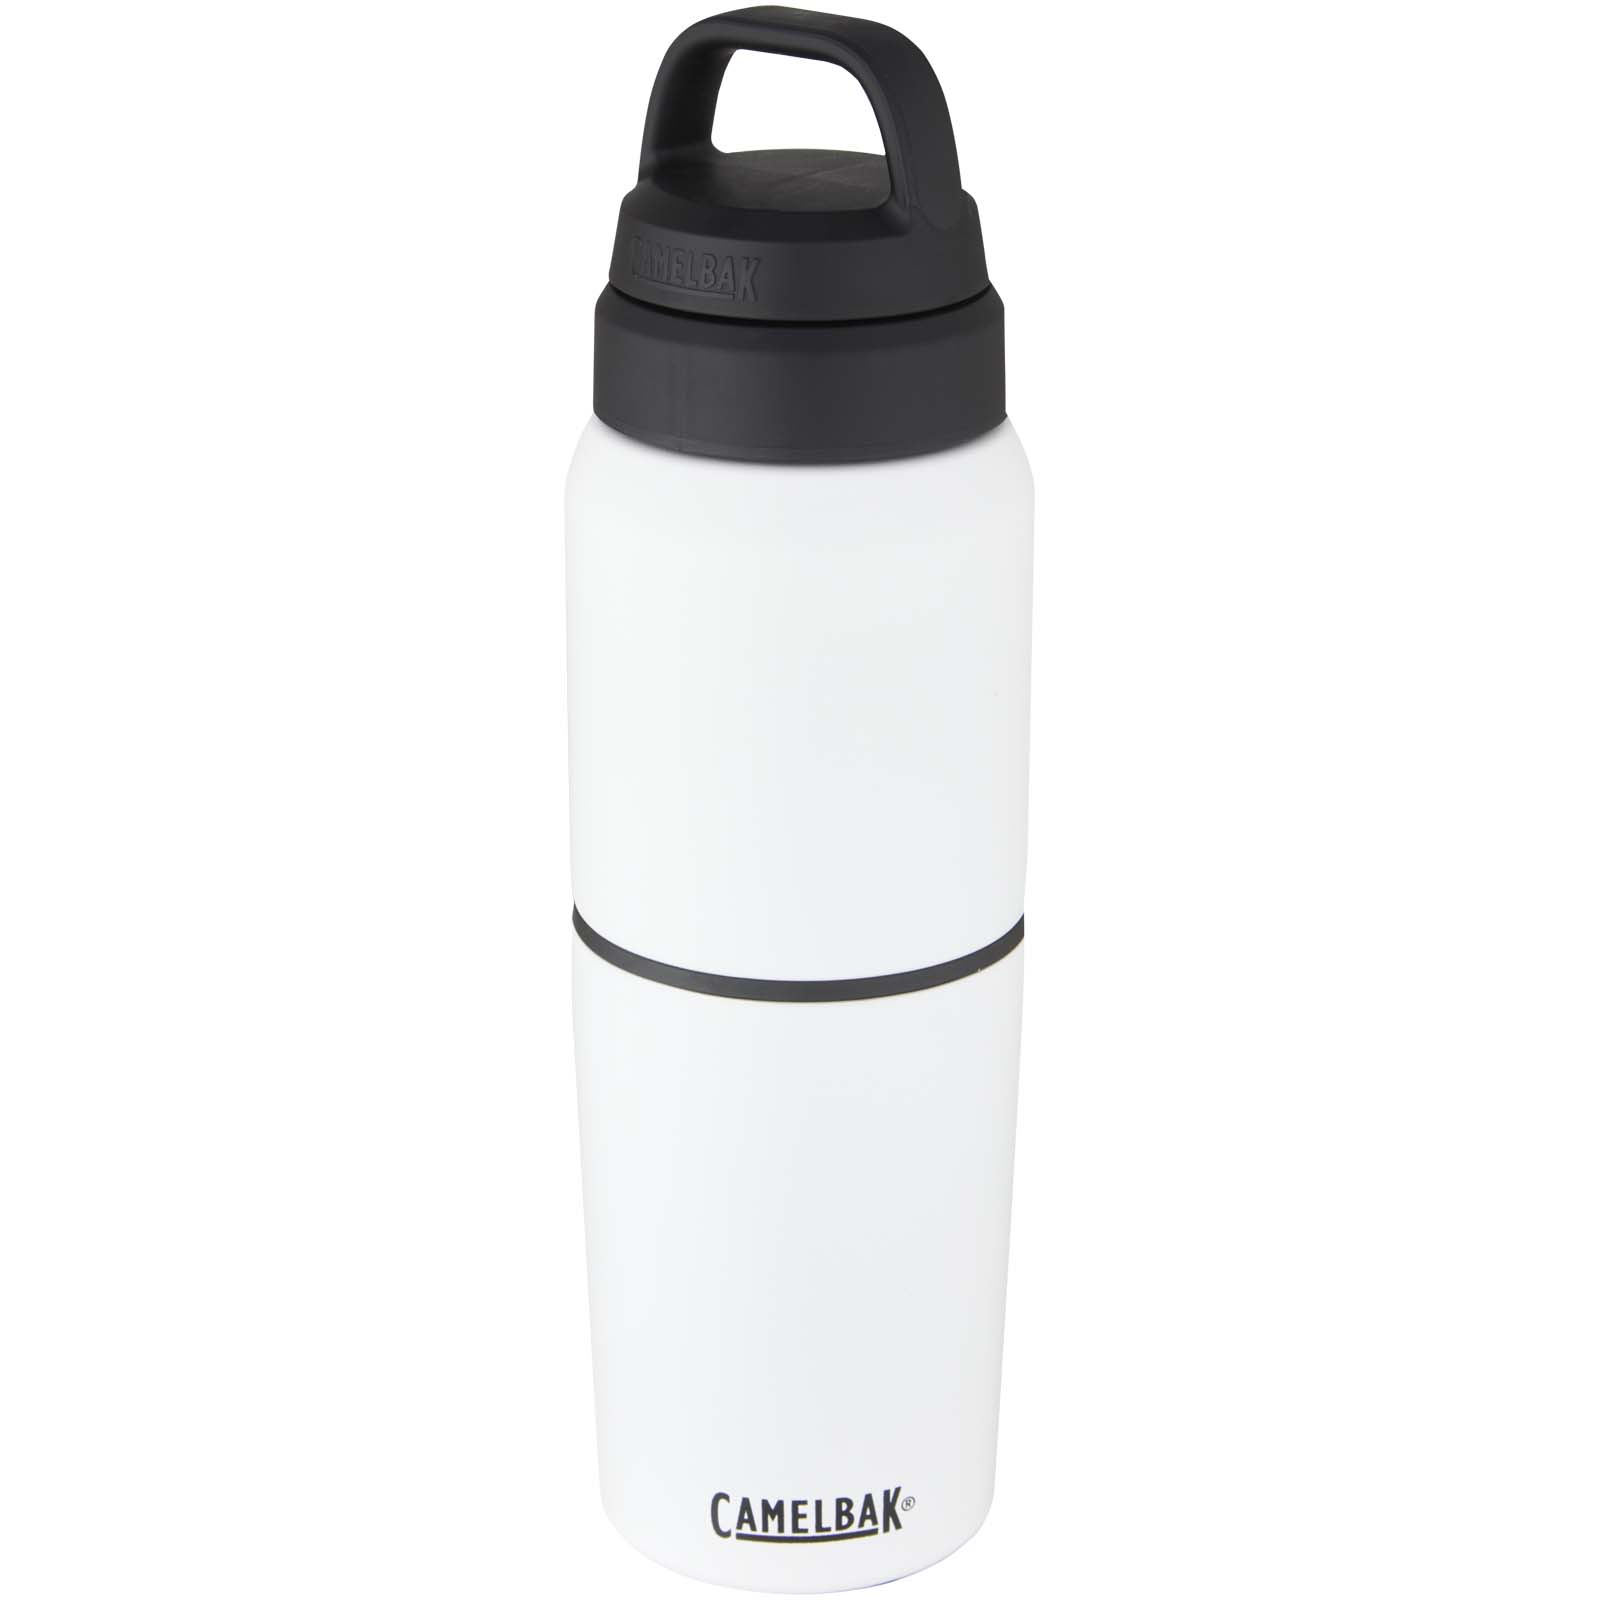 Advertising Water bottles - CamelBak® MultiBev vacuum insulated stainless steel 500 ml bottle and 350 ml cup